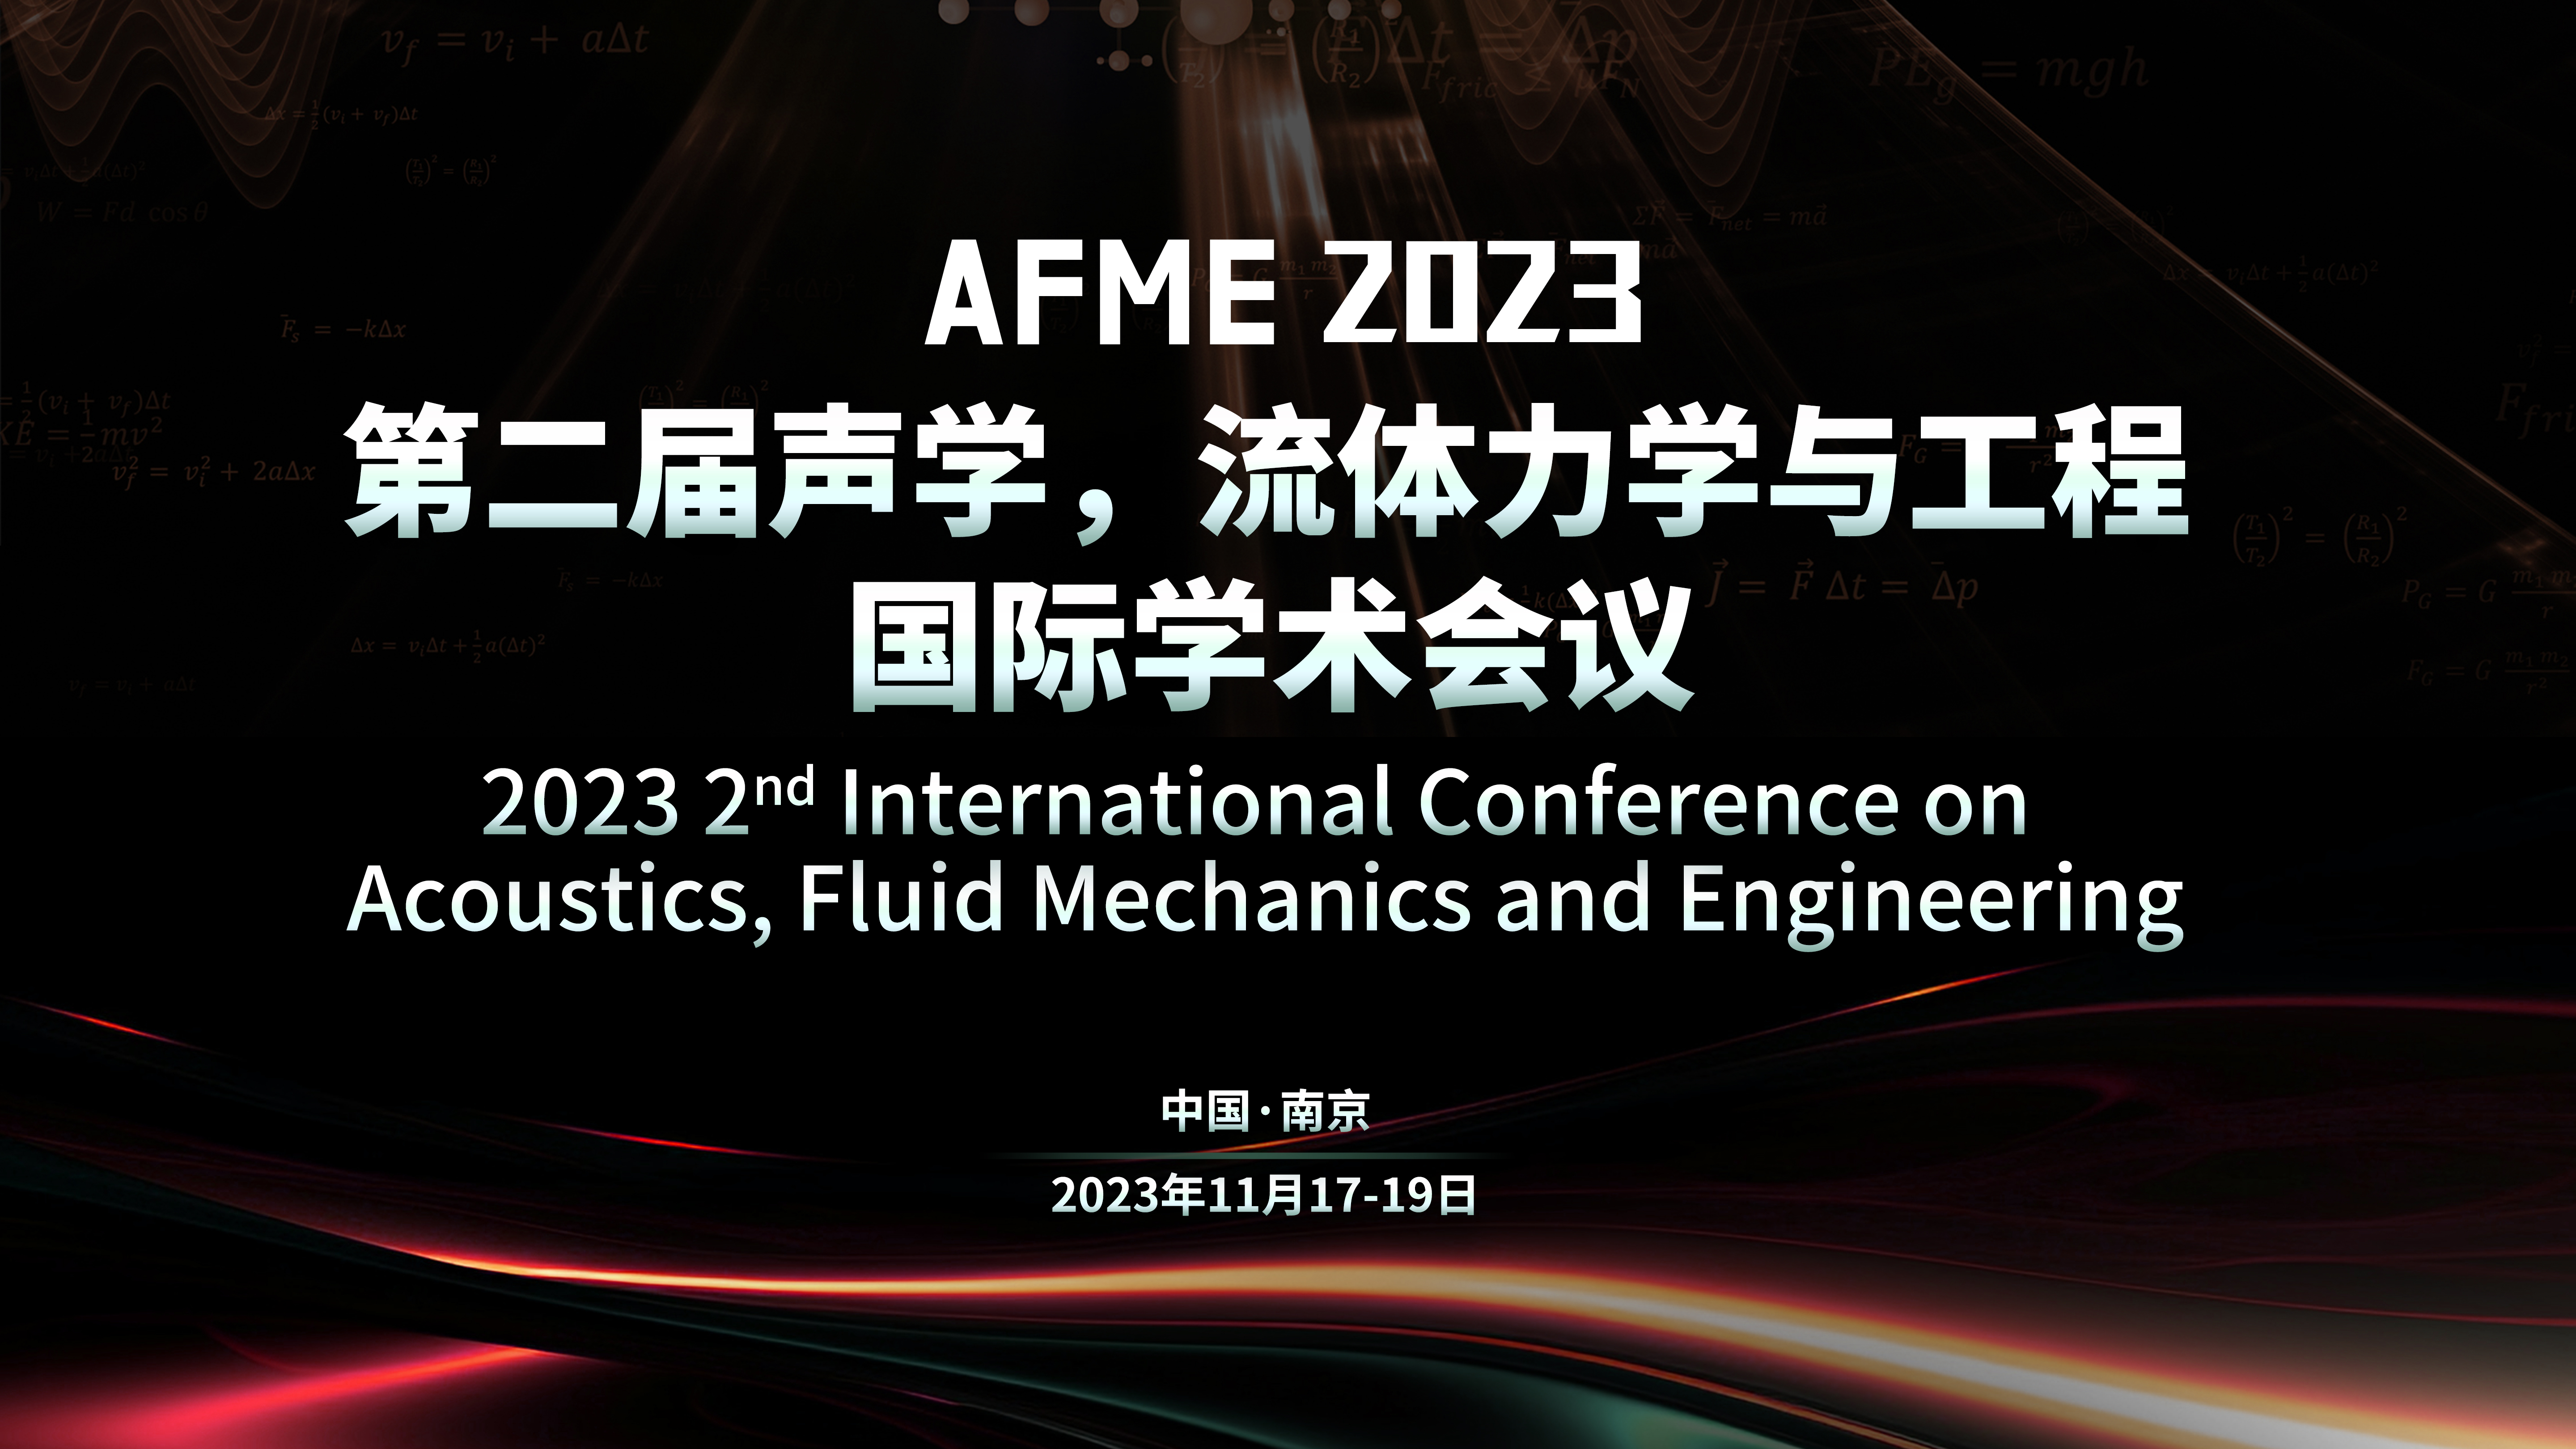 AFME 2023-主视觉16：9.jpg